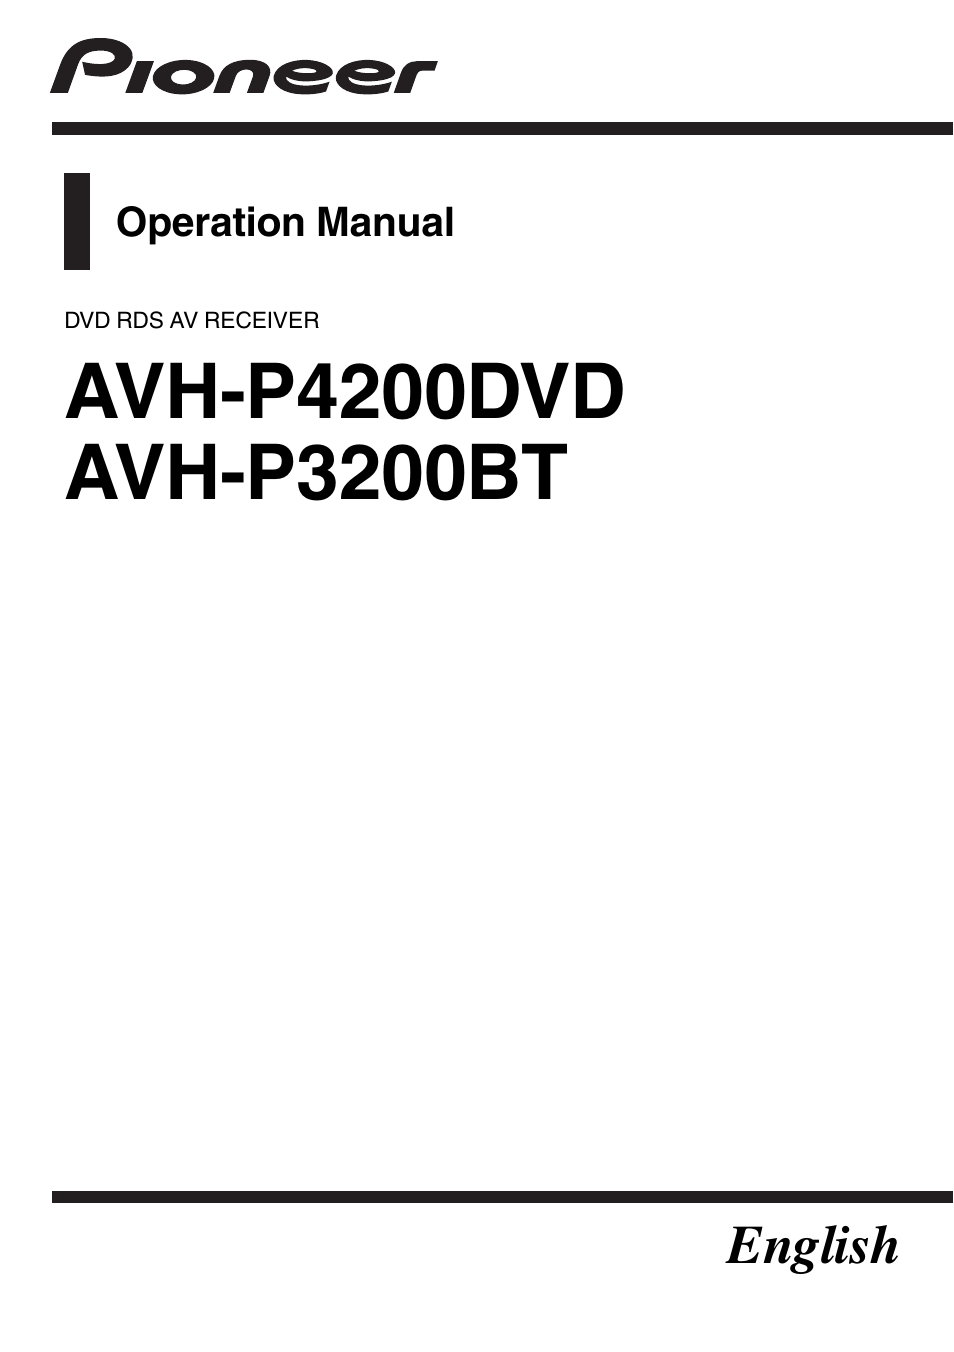 Pioneer AVH-P4200DVD User Manual | 96 pages